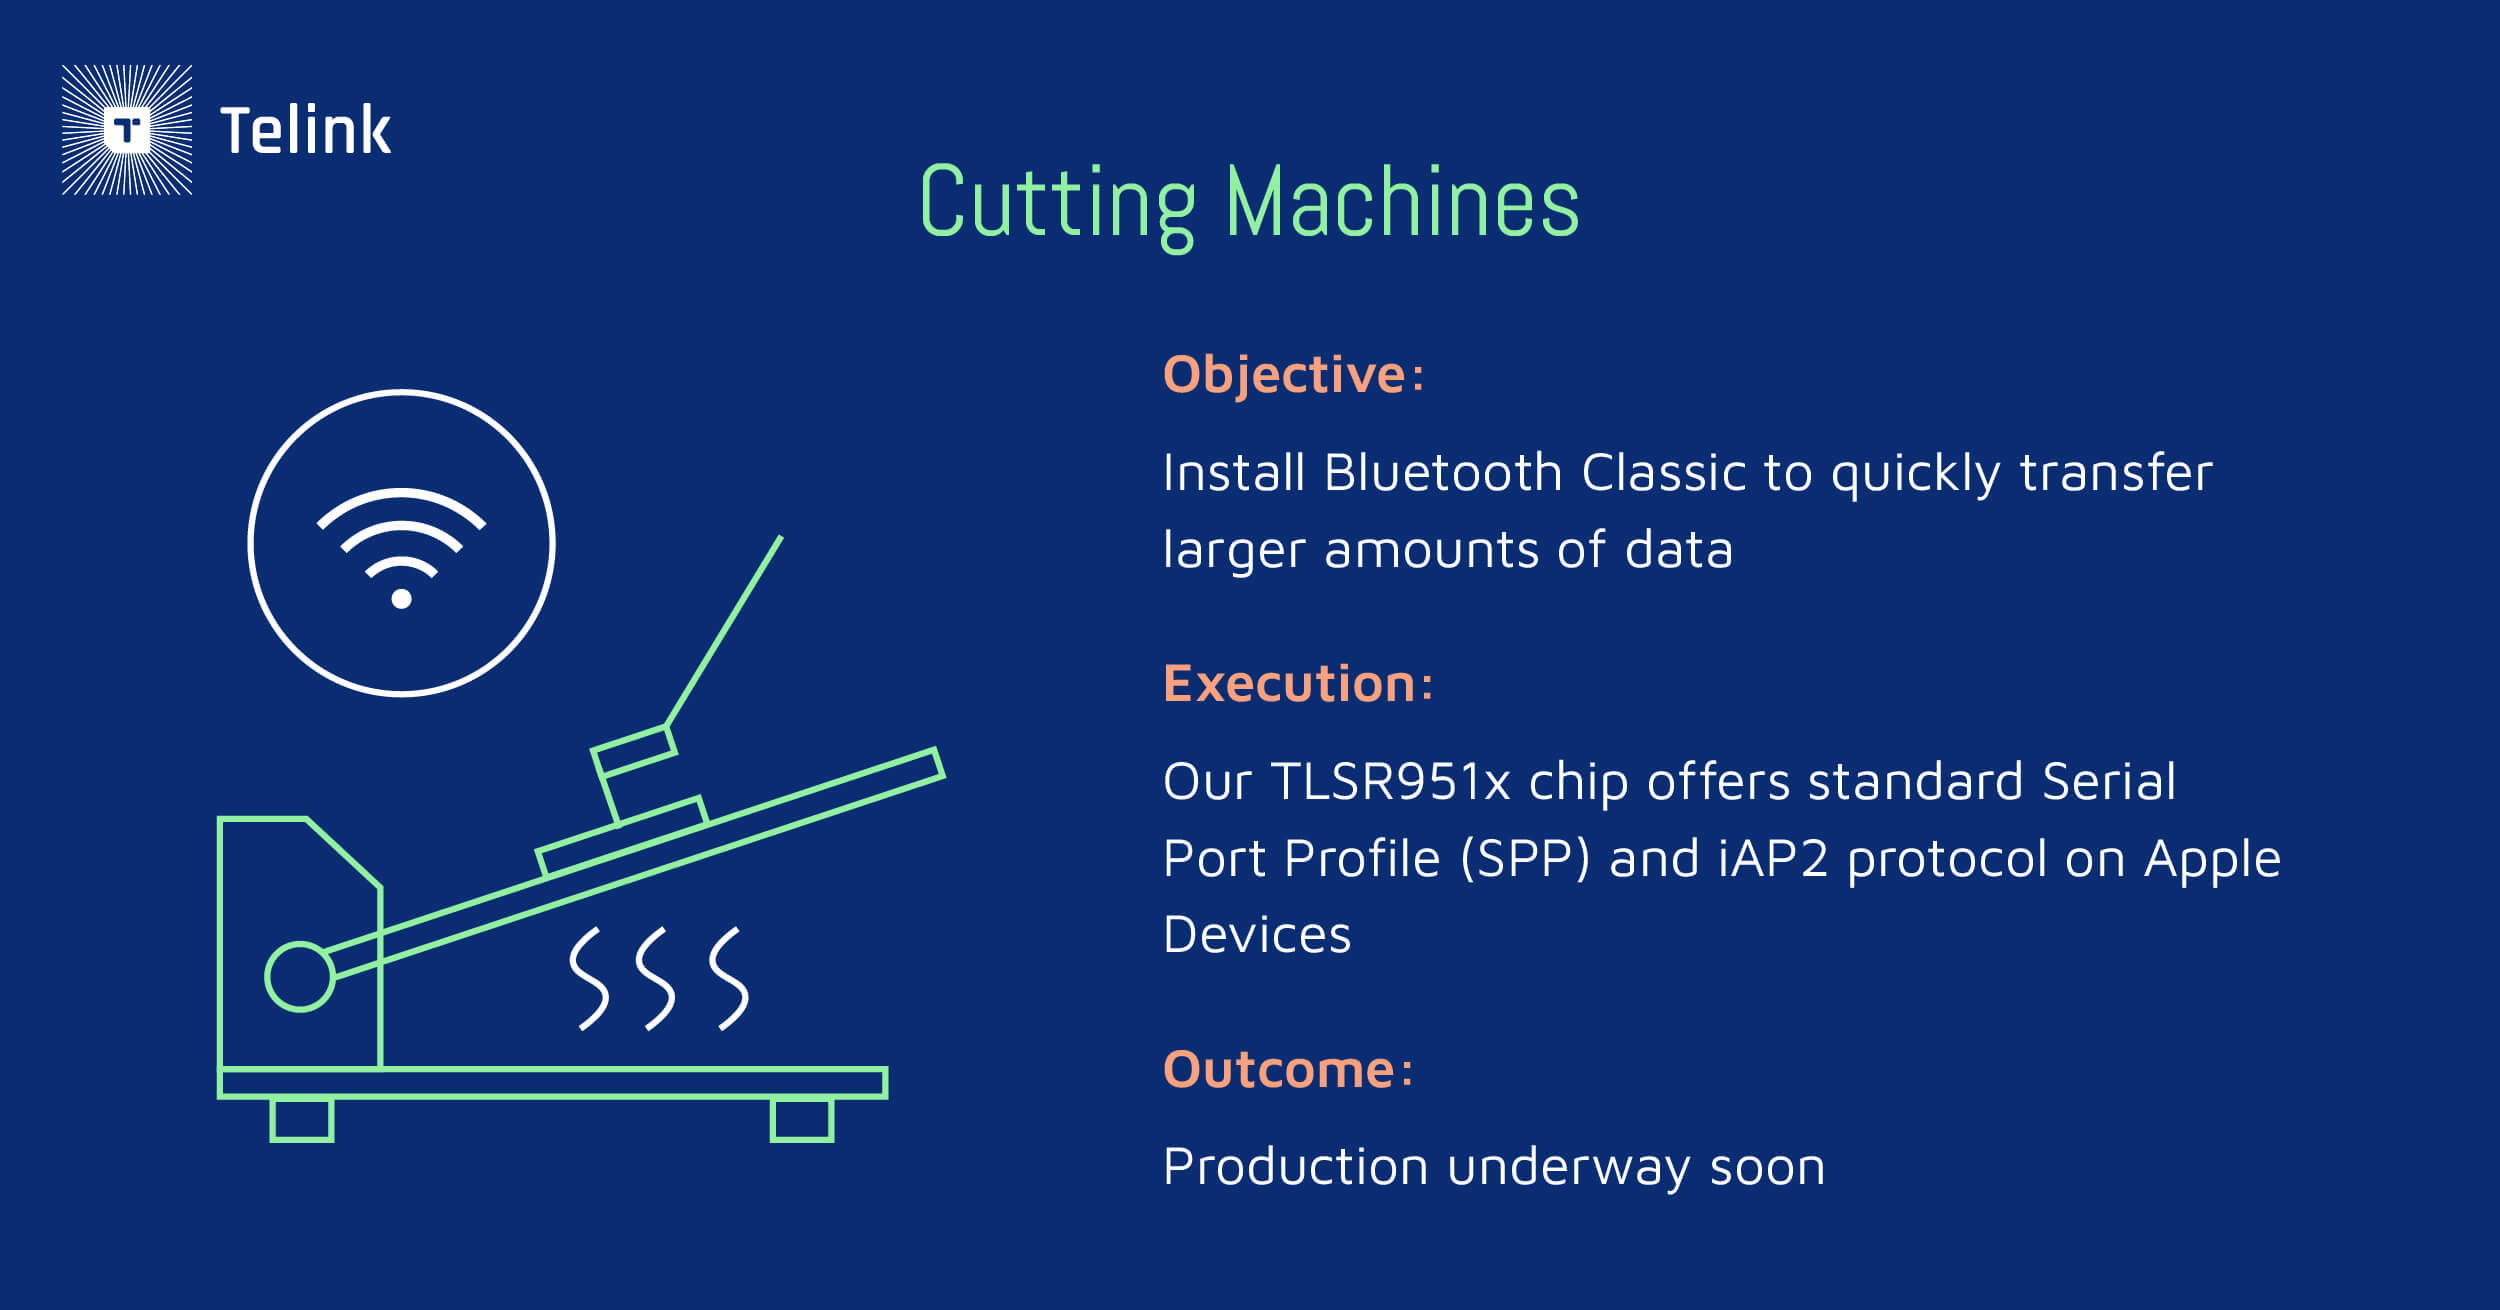 Development process for cutting machines